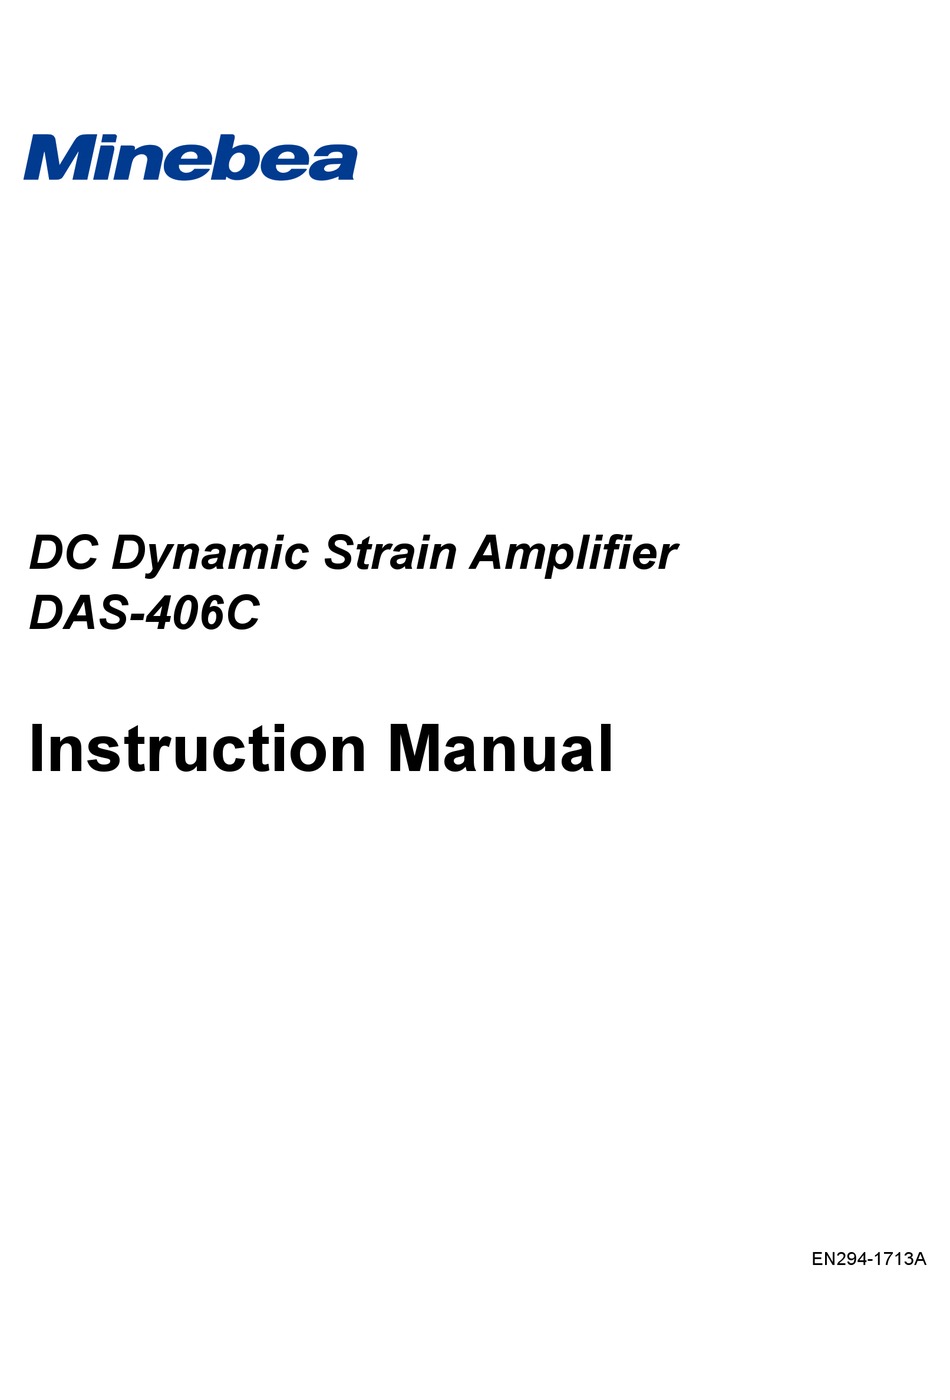 MINEBEA DAS-406C INSTRUCTION MANUAL Pdf Download | ManualsLib